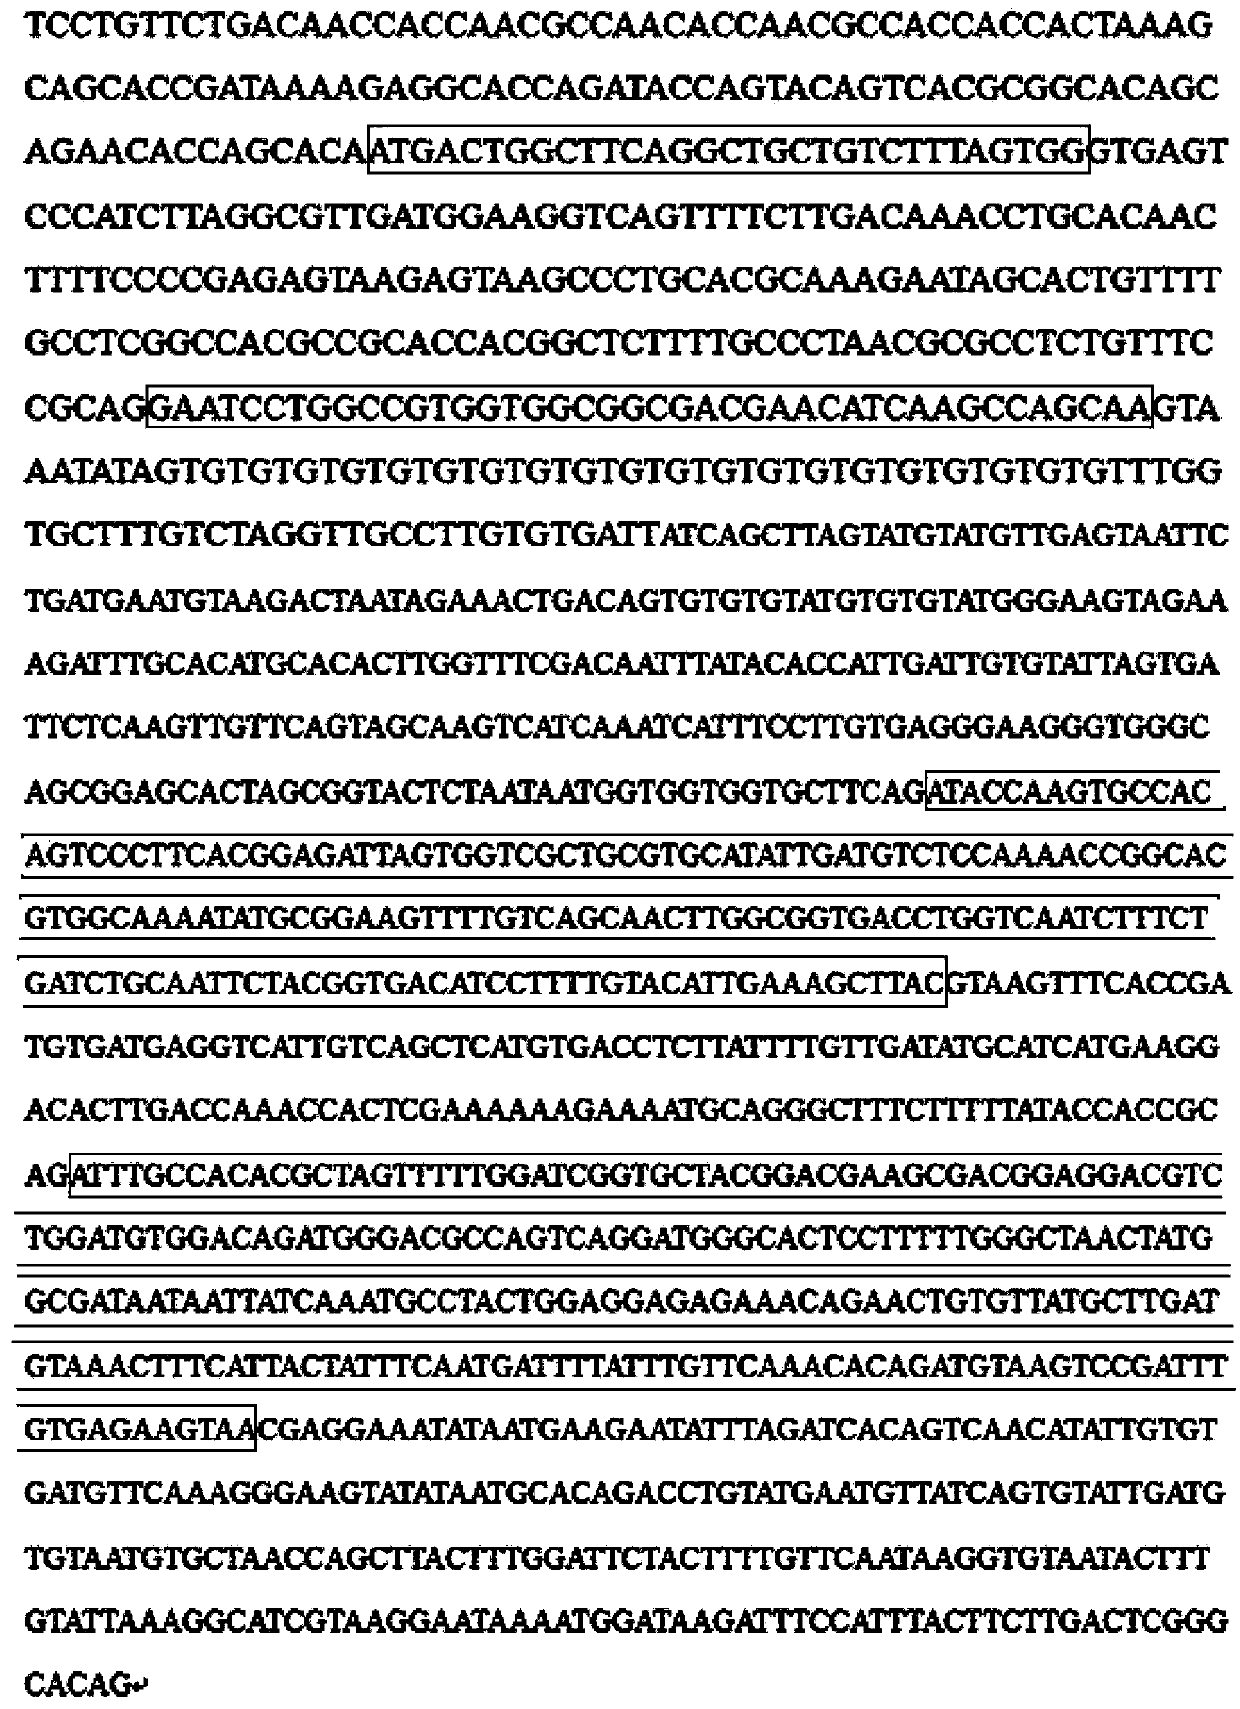 Gene polymorphic marker of C-type lectin of portunus trituberculatus and genetic typing method of SNP (Single Nucleotide Polymorphism) molecular markers